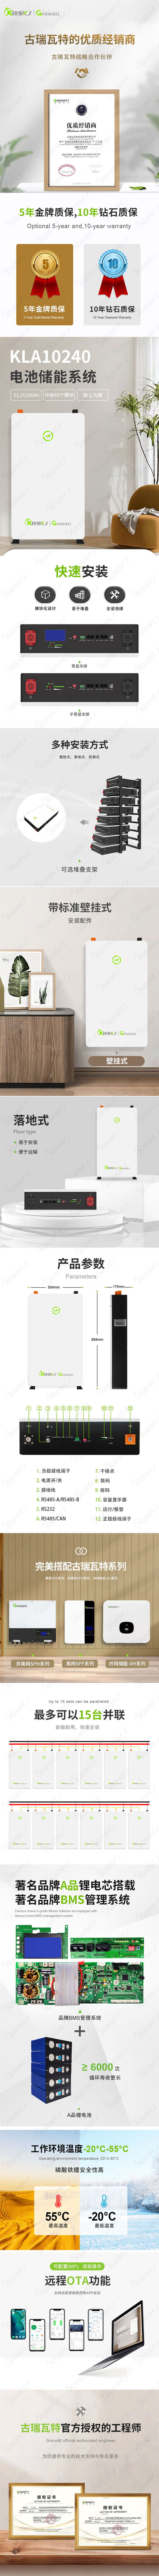 KLA10240-电池储能系统(康威斯-中文）.jpg